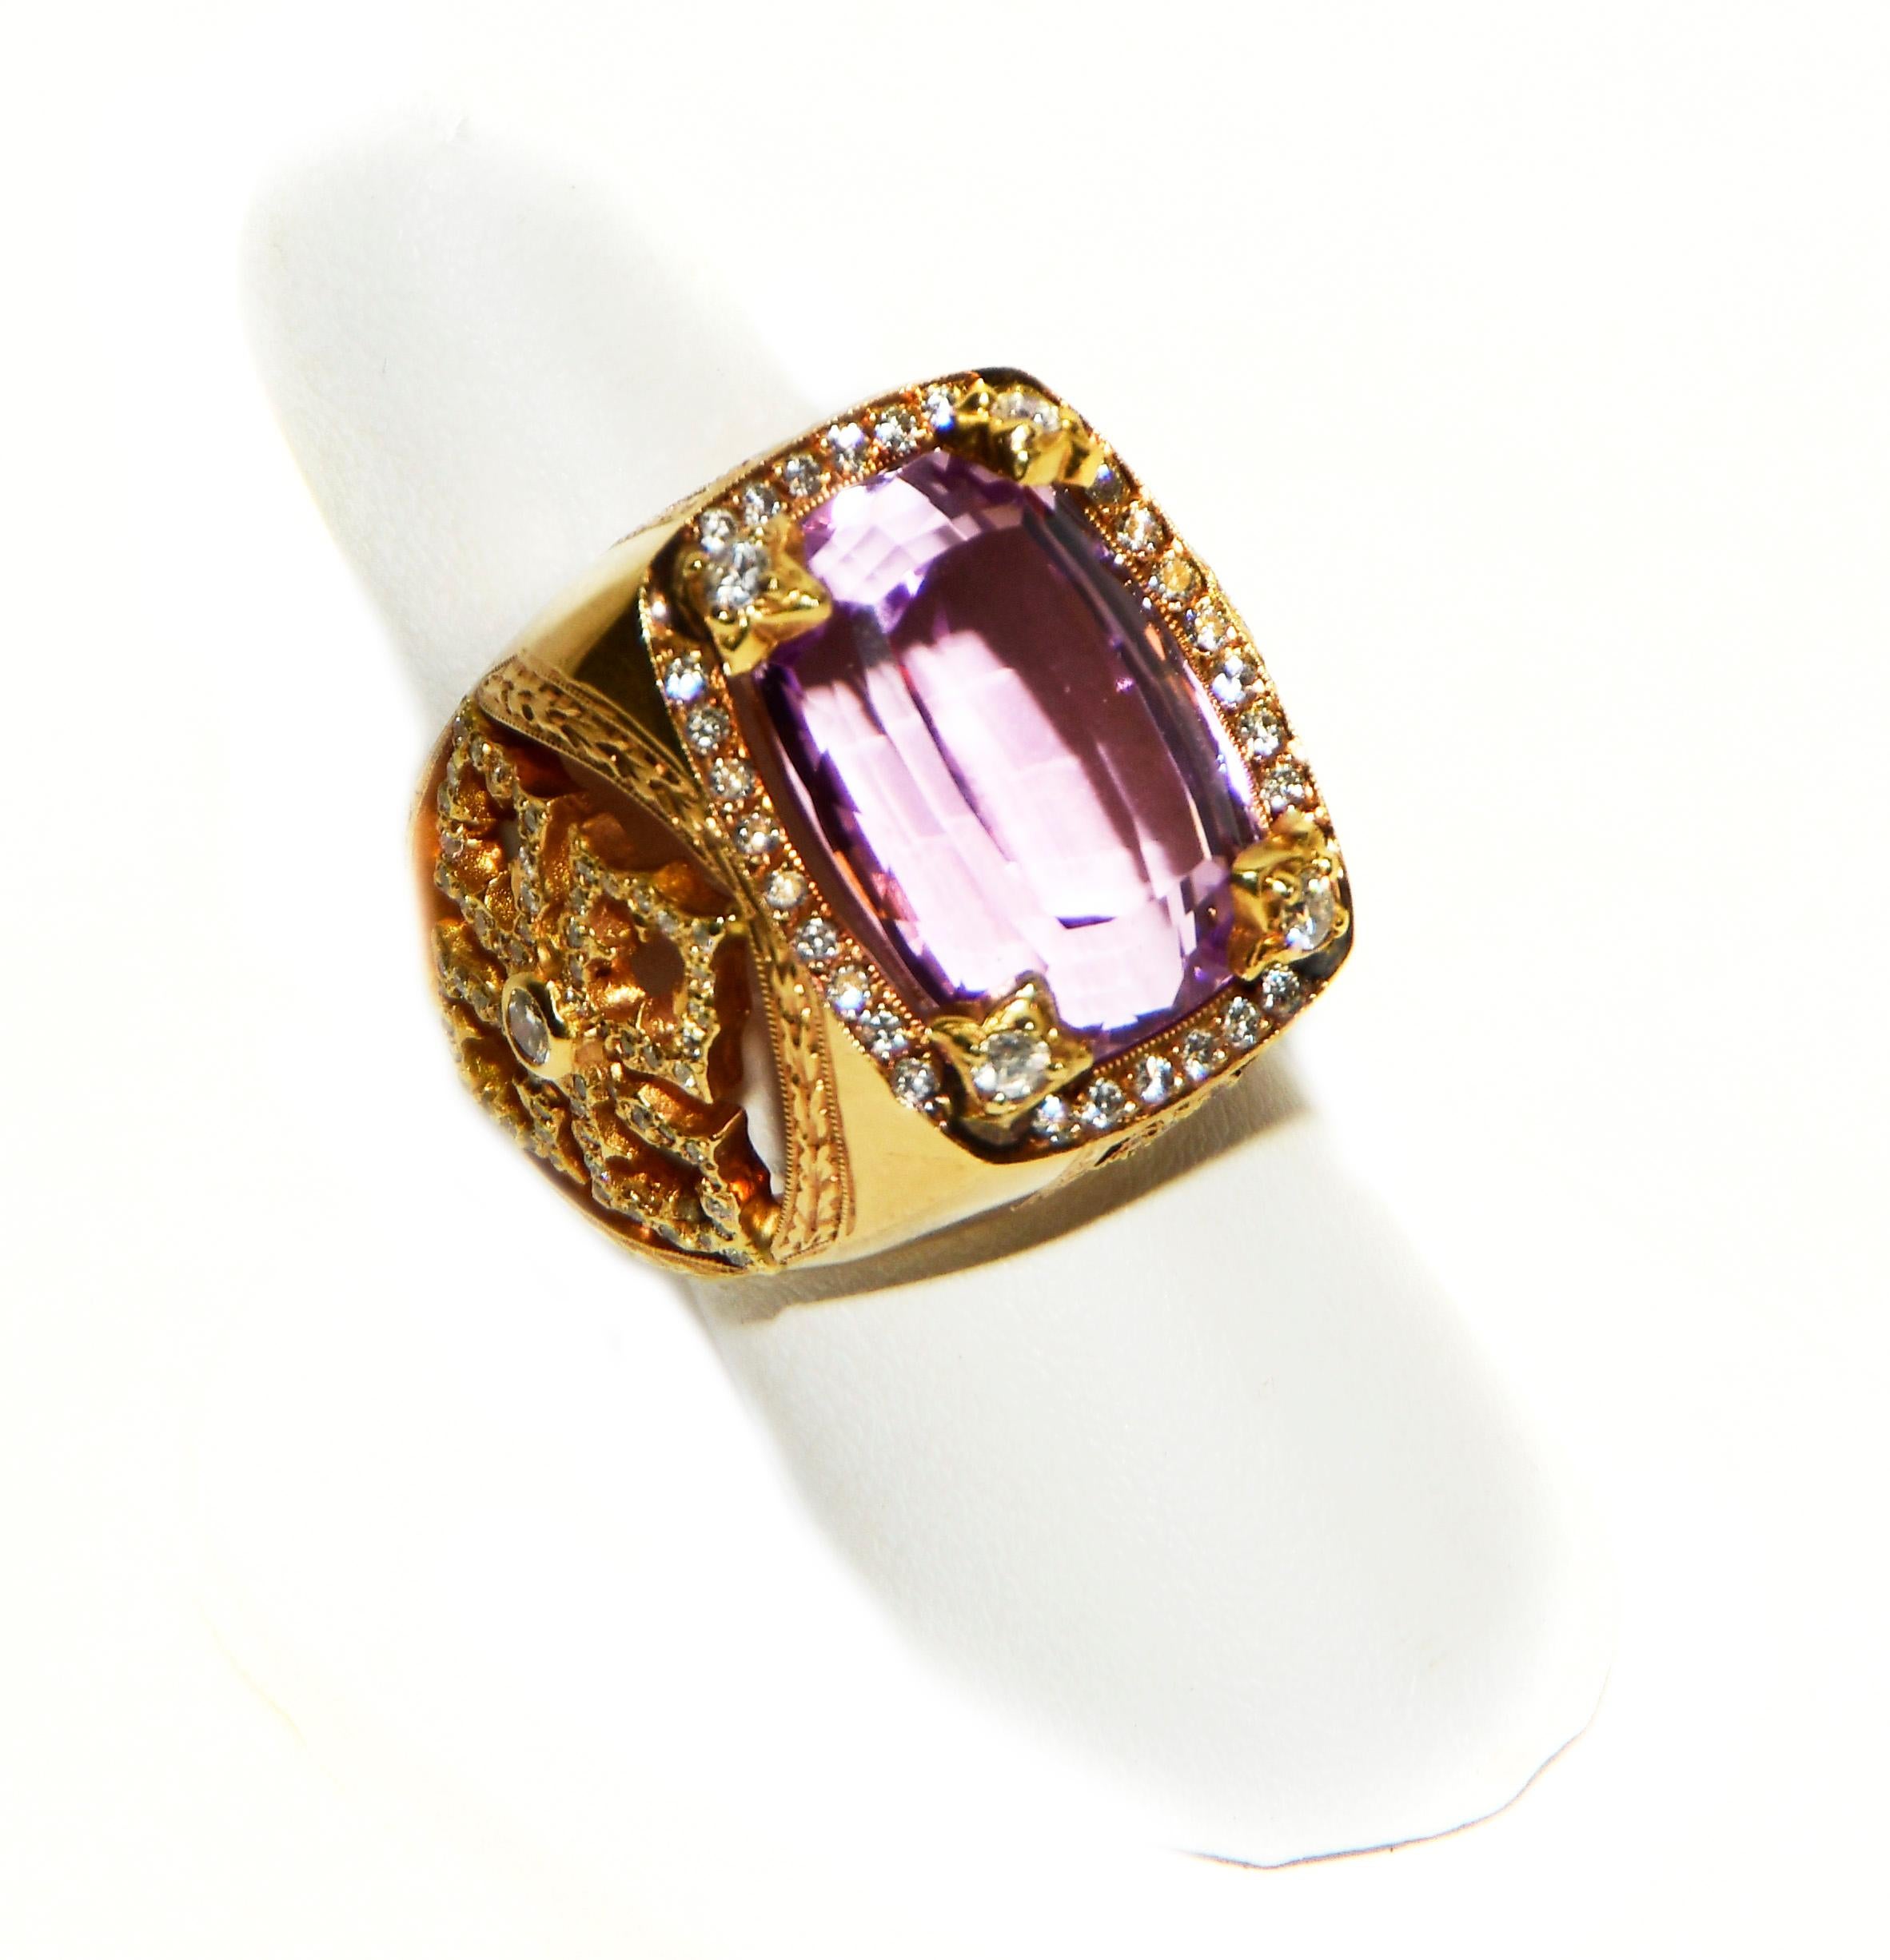 Artisan Loree Rodkin Gothic Collection Diamond and Emerald Cut Kunzite Ring